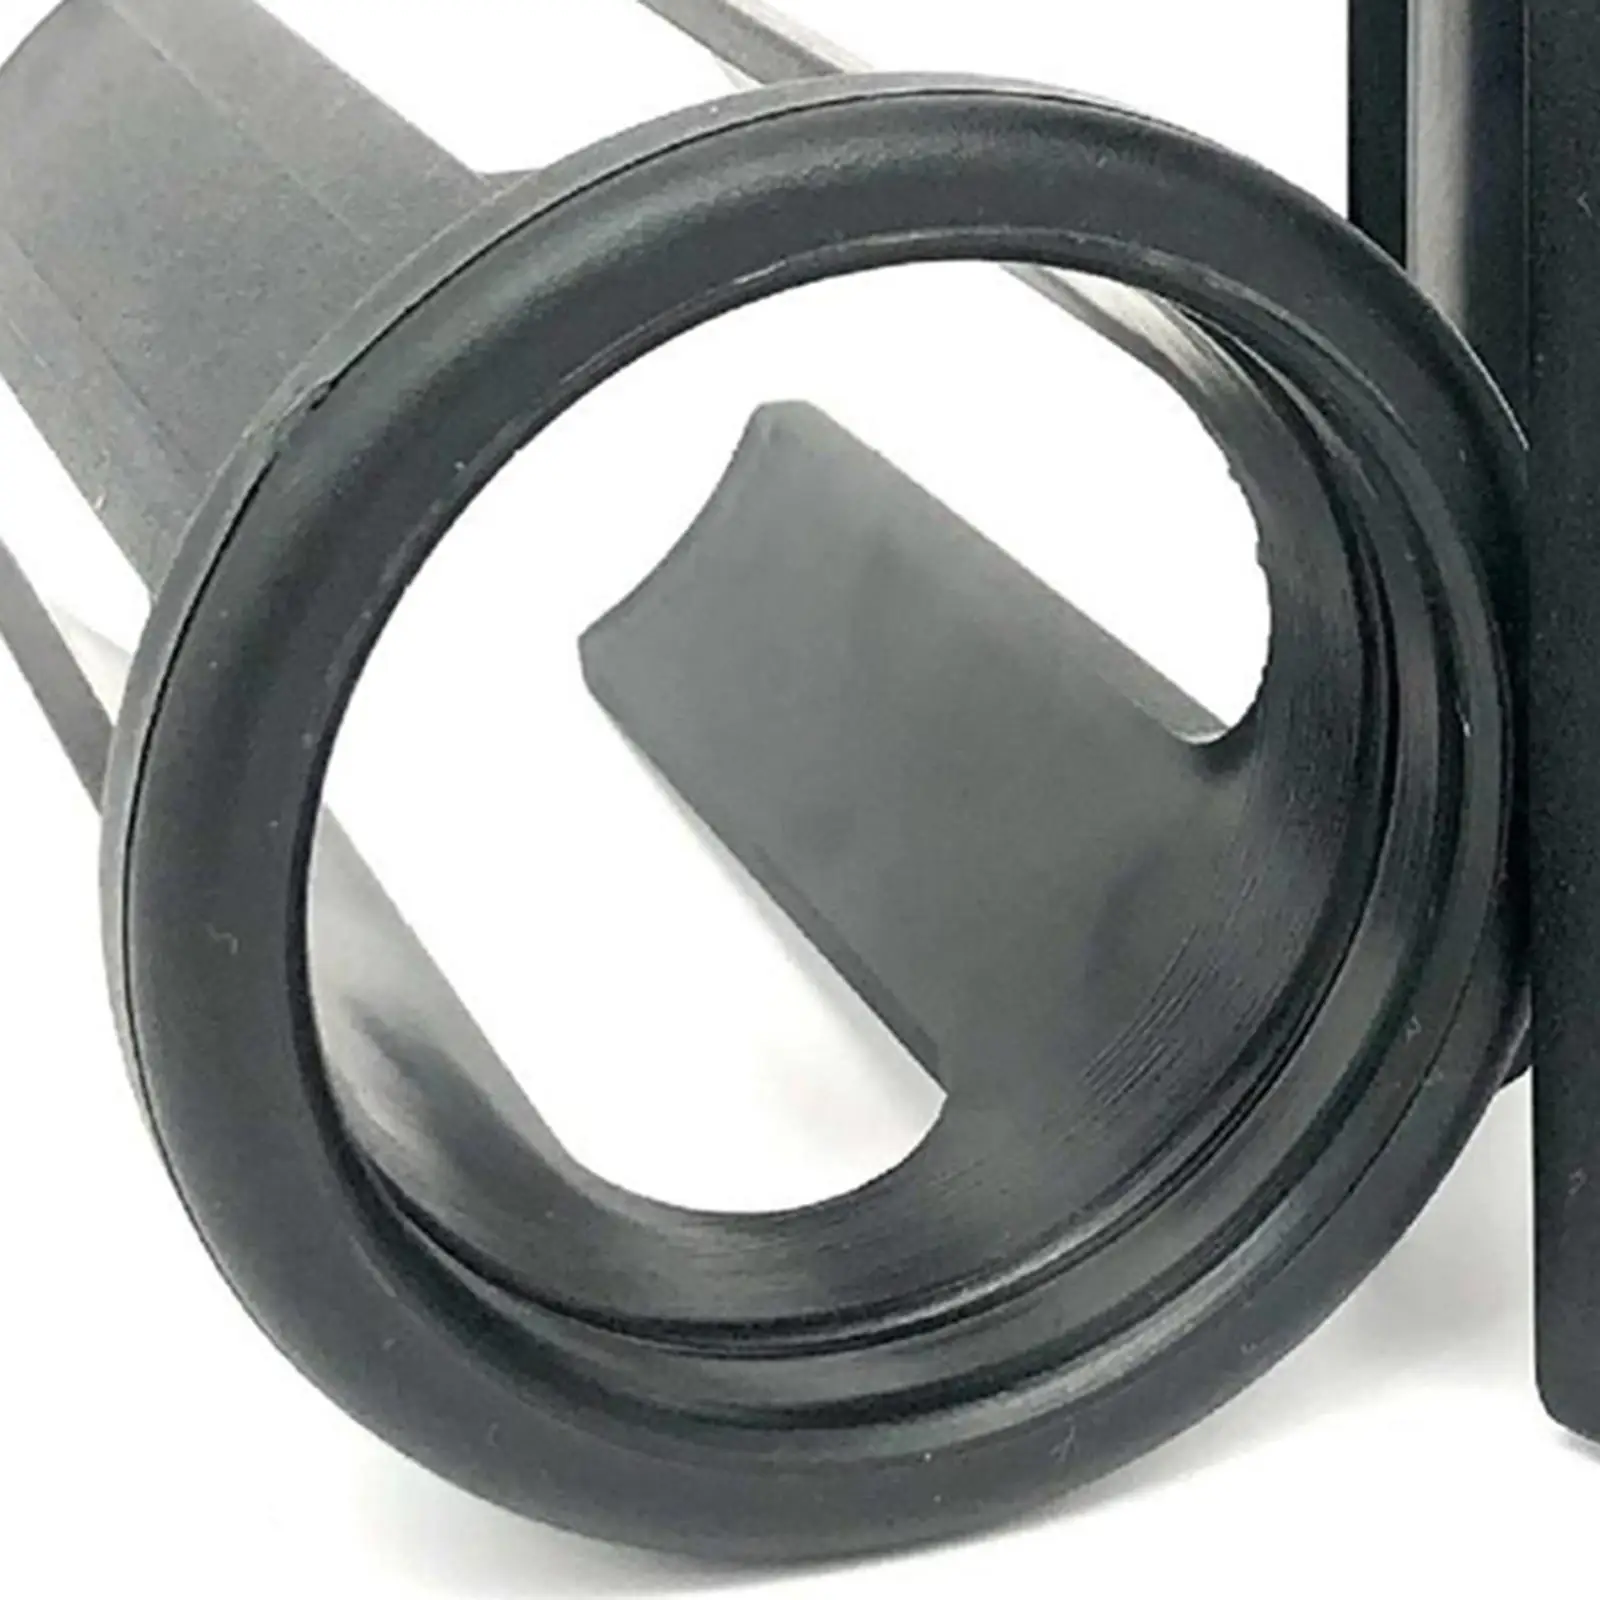 Adapter Sleeve Variable Diameter Sleeve Supplies Equipment for Weightlifting